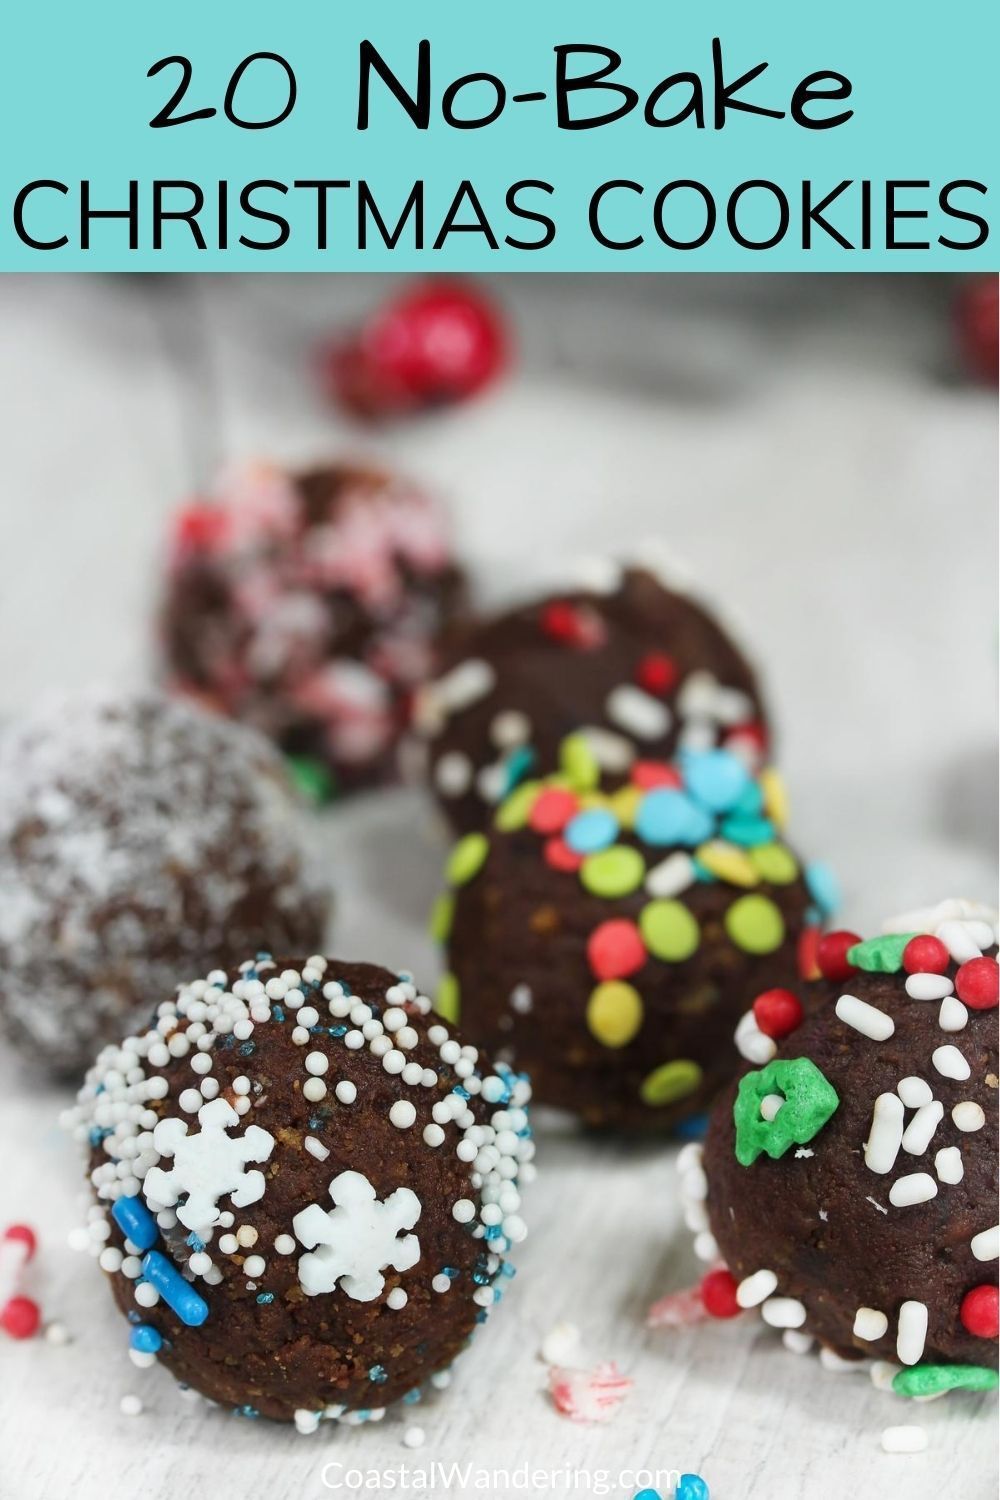 20 Easy No-Bake Christmas Cookies -   19 christmas cookies recipes easy no bake ideas